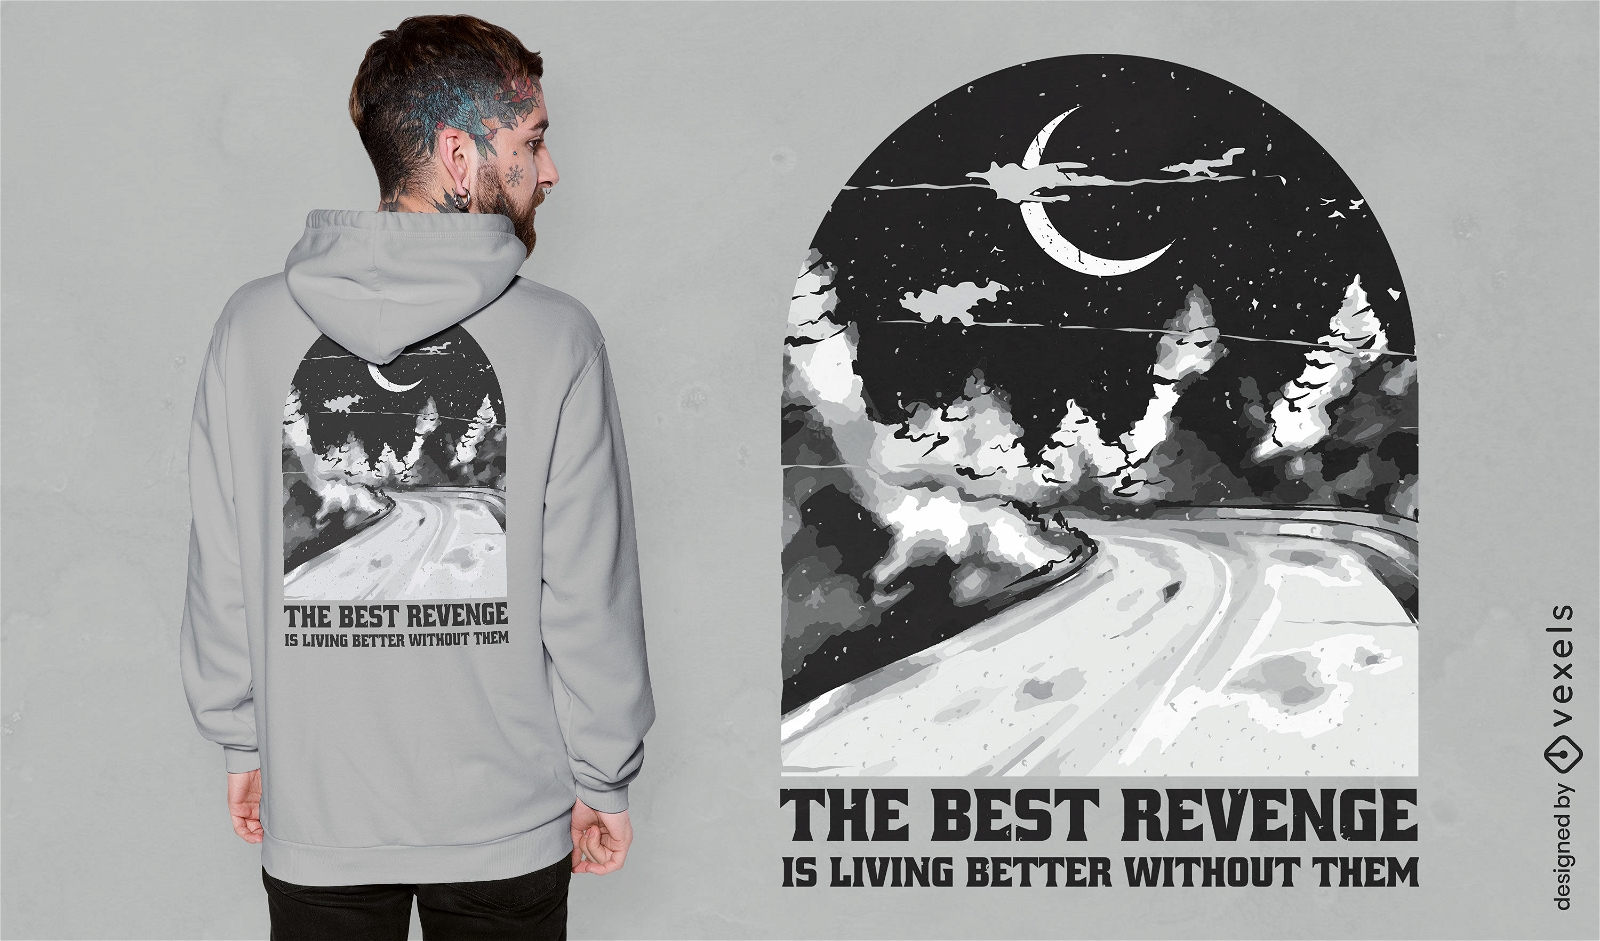 Highway of revenge quote t-shirt design